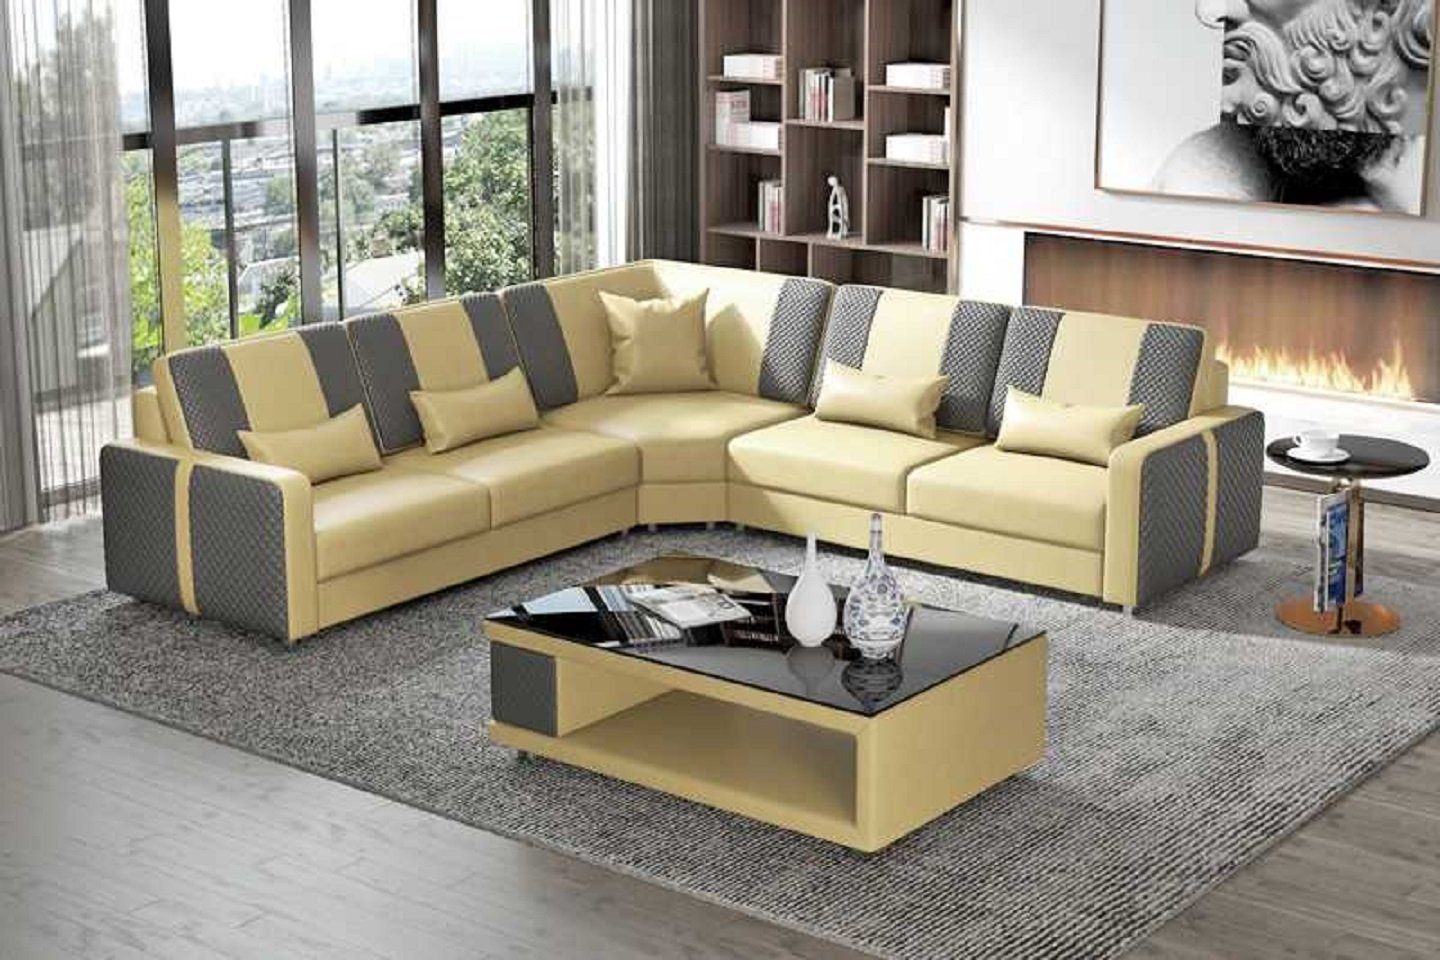 L JVmoebel Teile, 3 Made Europe Ecksofa Modern Beige in Couch Eckcouch, Eckgarnitur Sofa Form Design Ecksofa